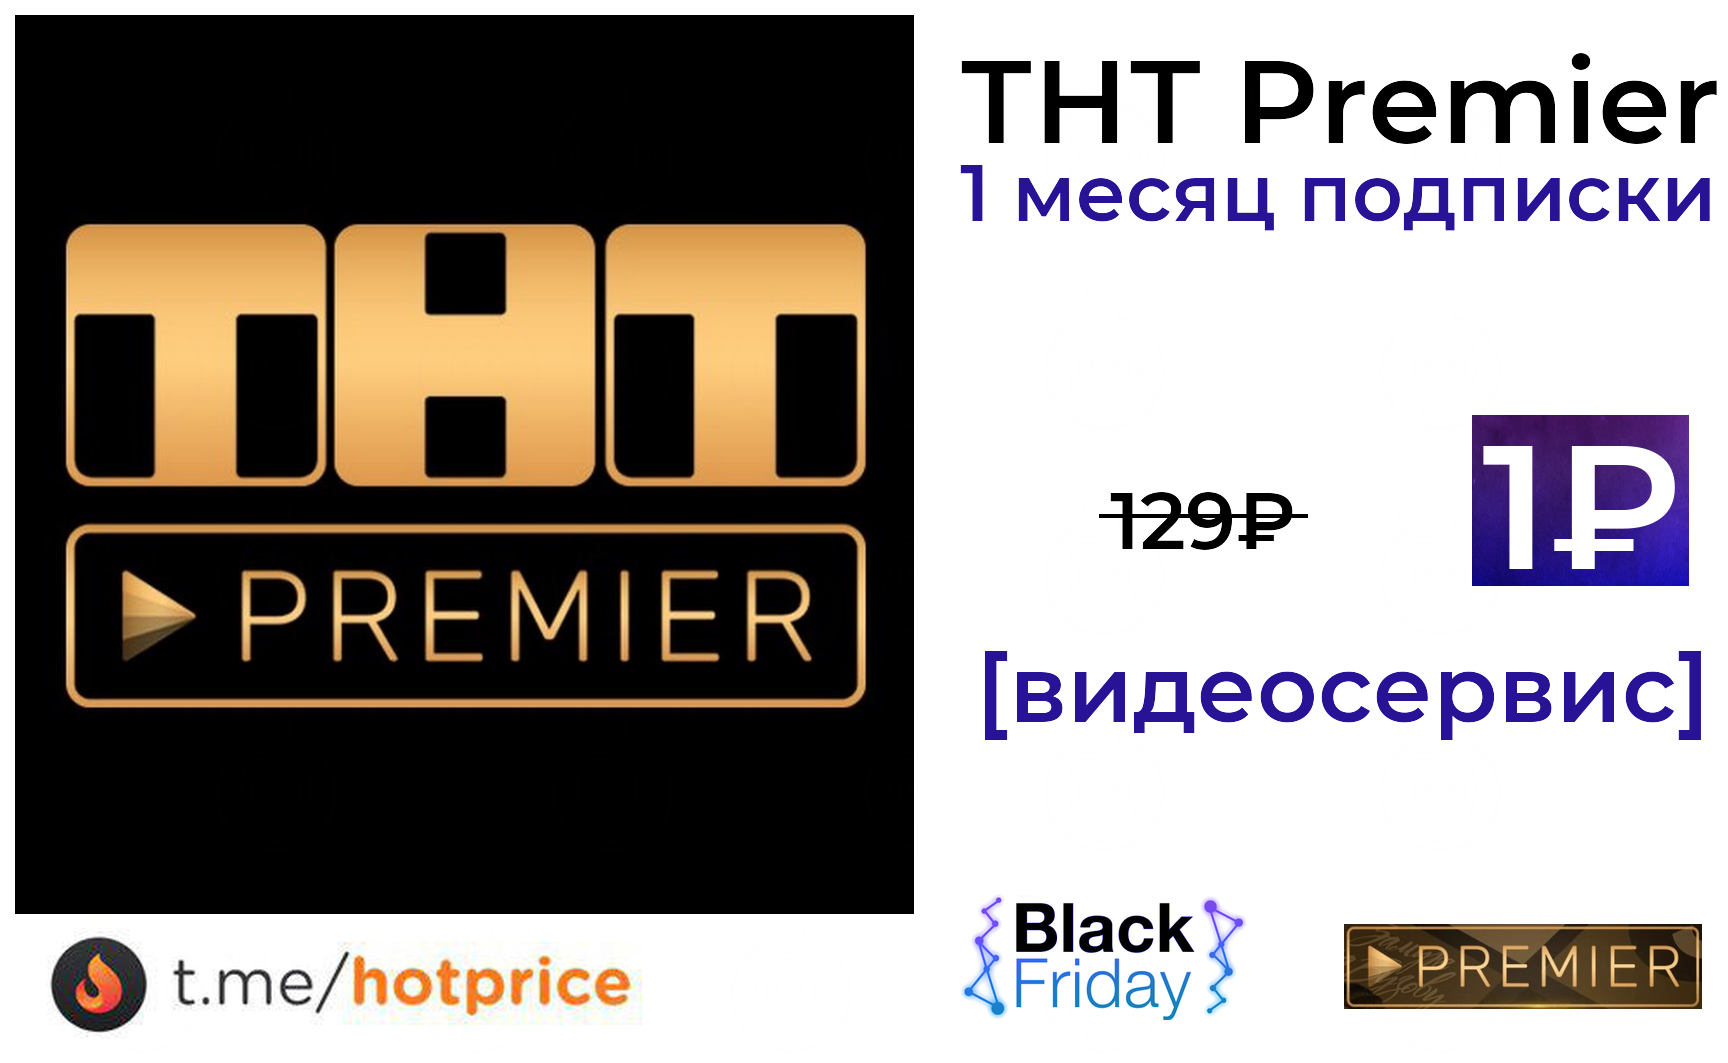 Премьер про канал. ТНТ Premier логотип. Кинотеатр Premier логотип. Телеканал ТНТ премьер.